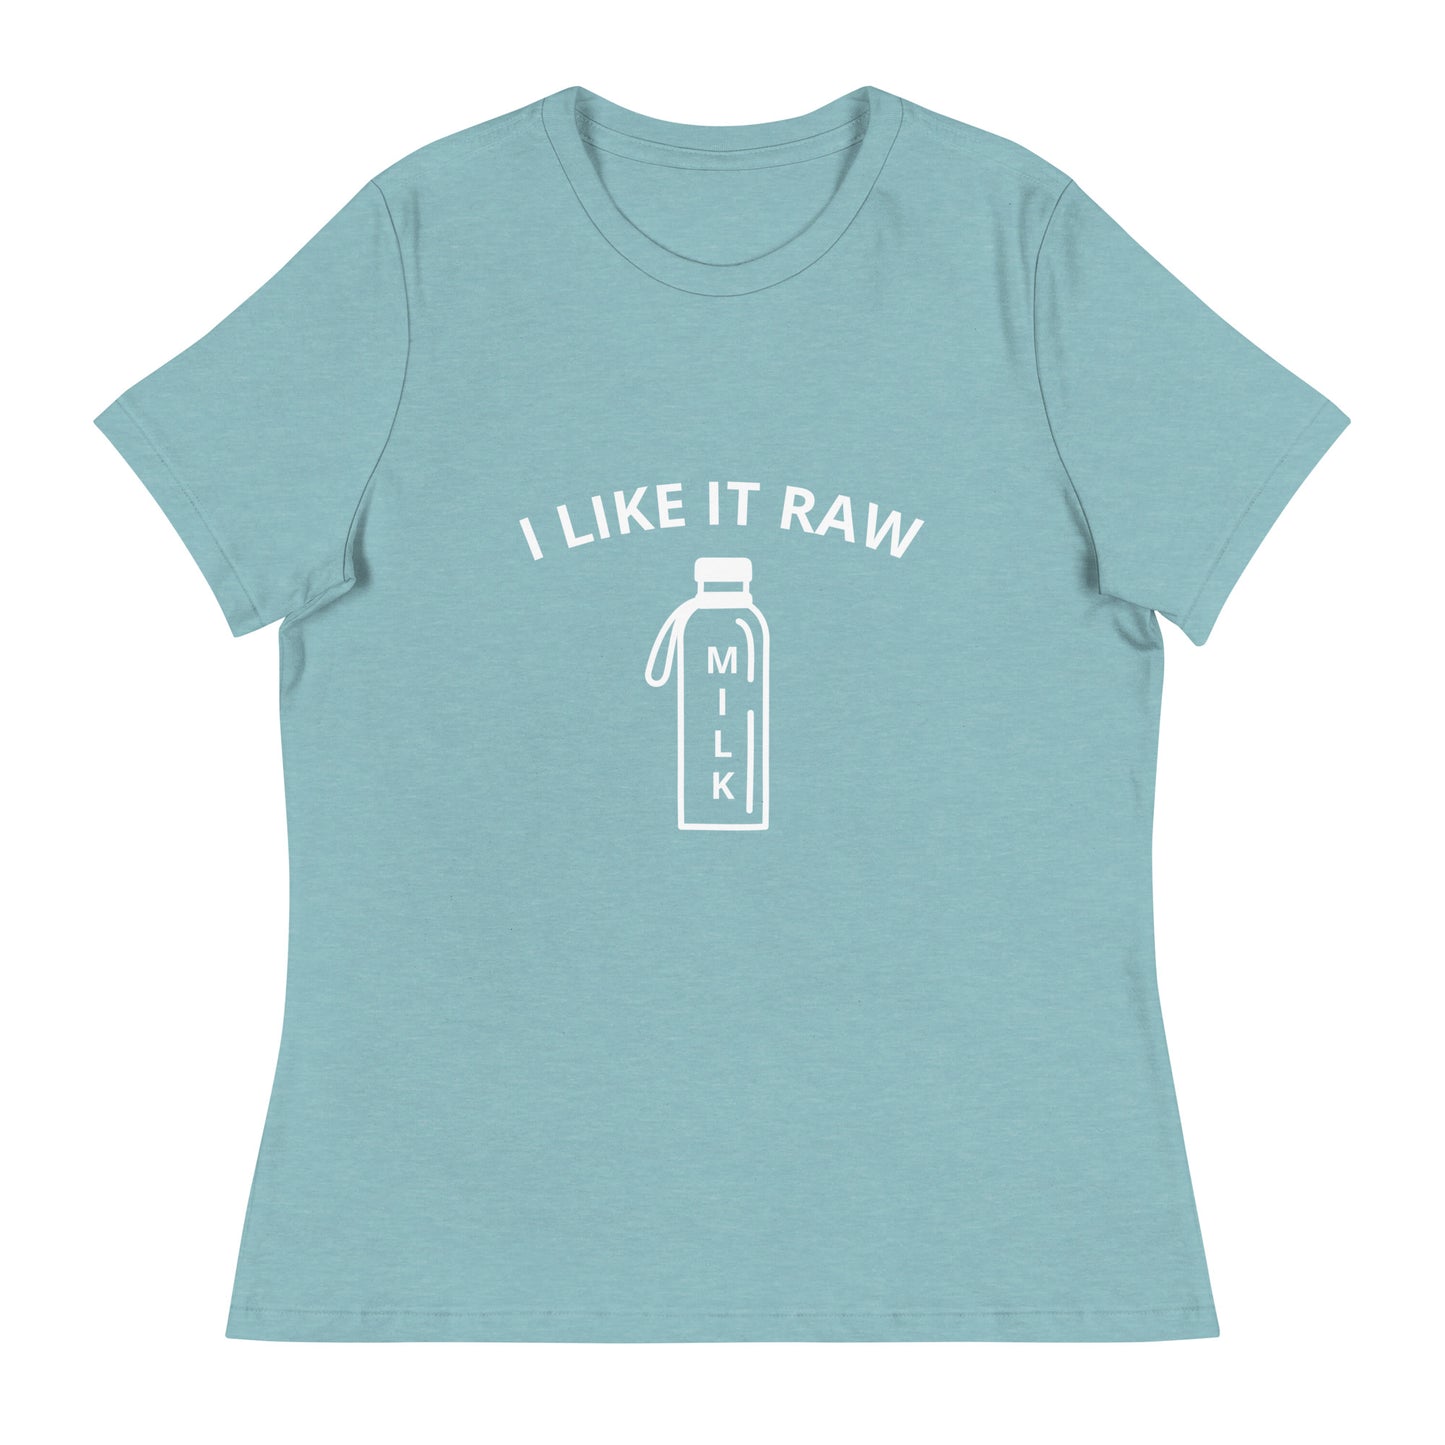 Like It Raw - Women's Relaxed T-Shirt